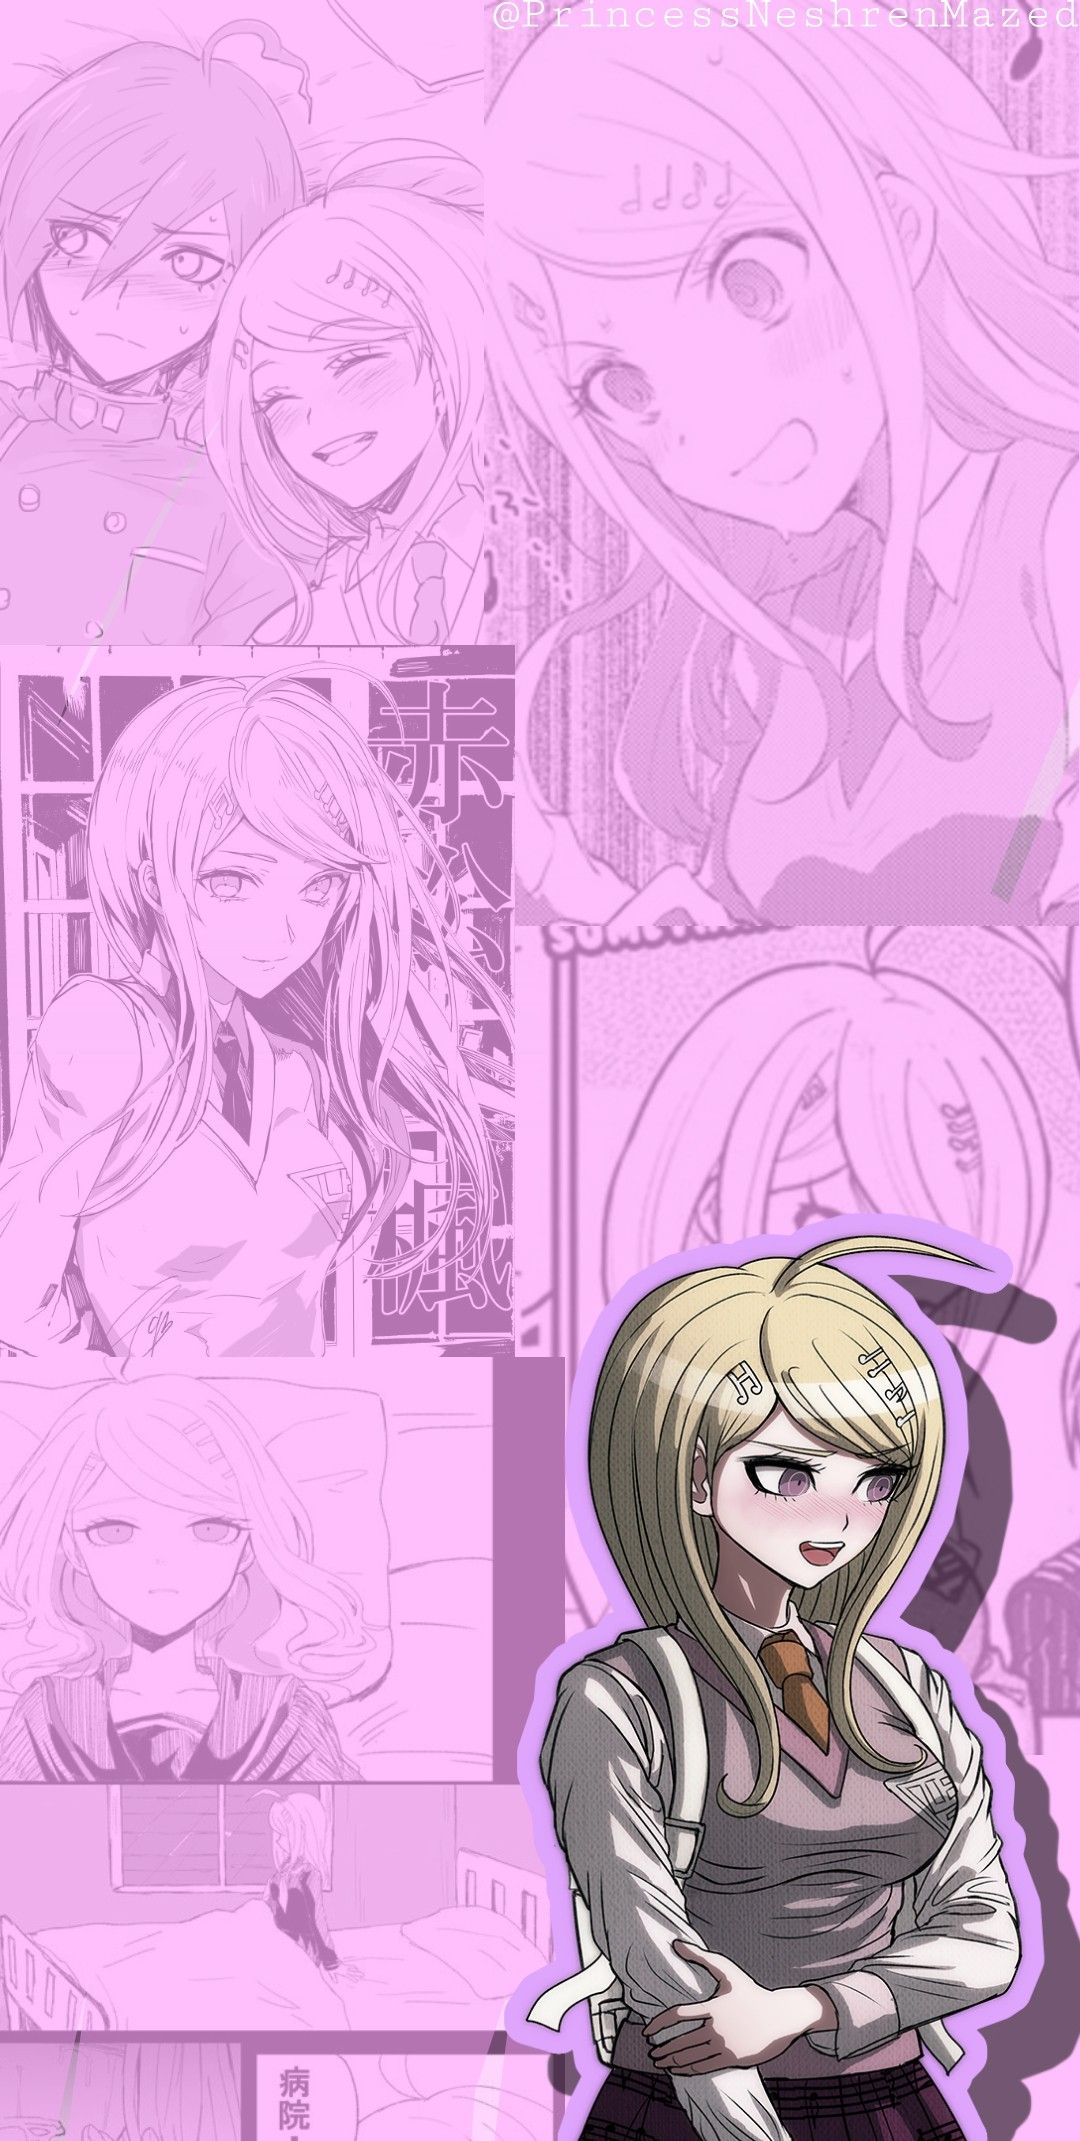 Kaede Akamatsu wallpaper. Anime wallpaper iphone, Anime wallpaper, Otaku anime